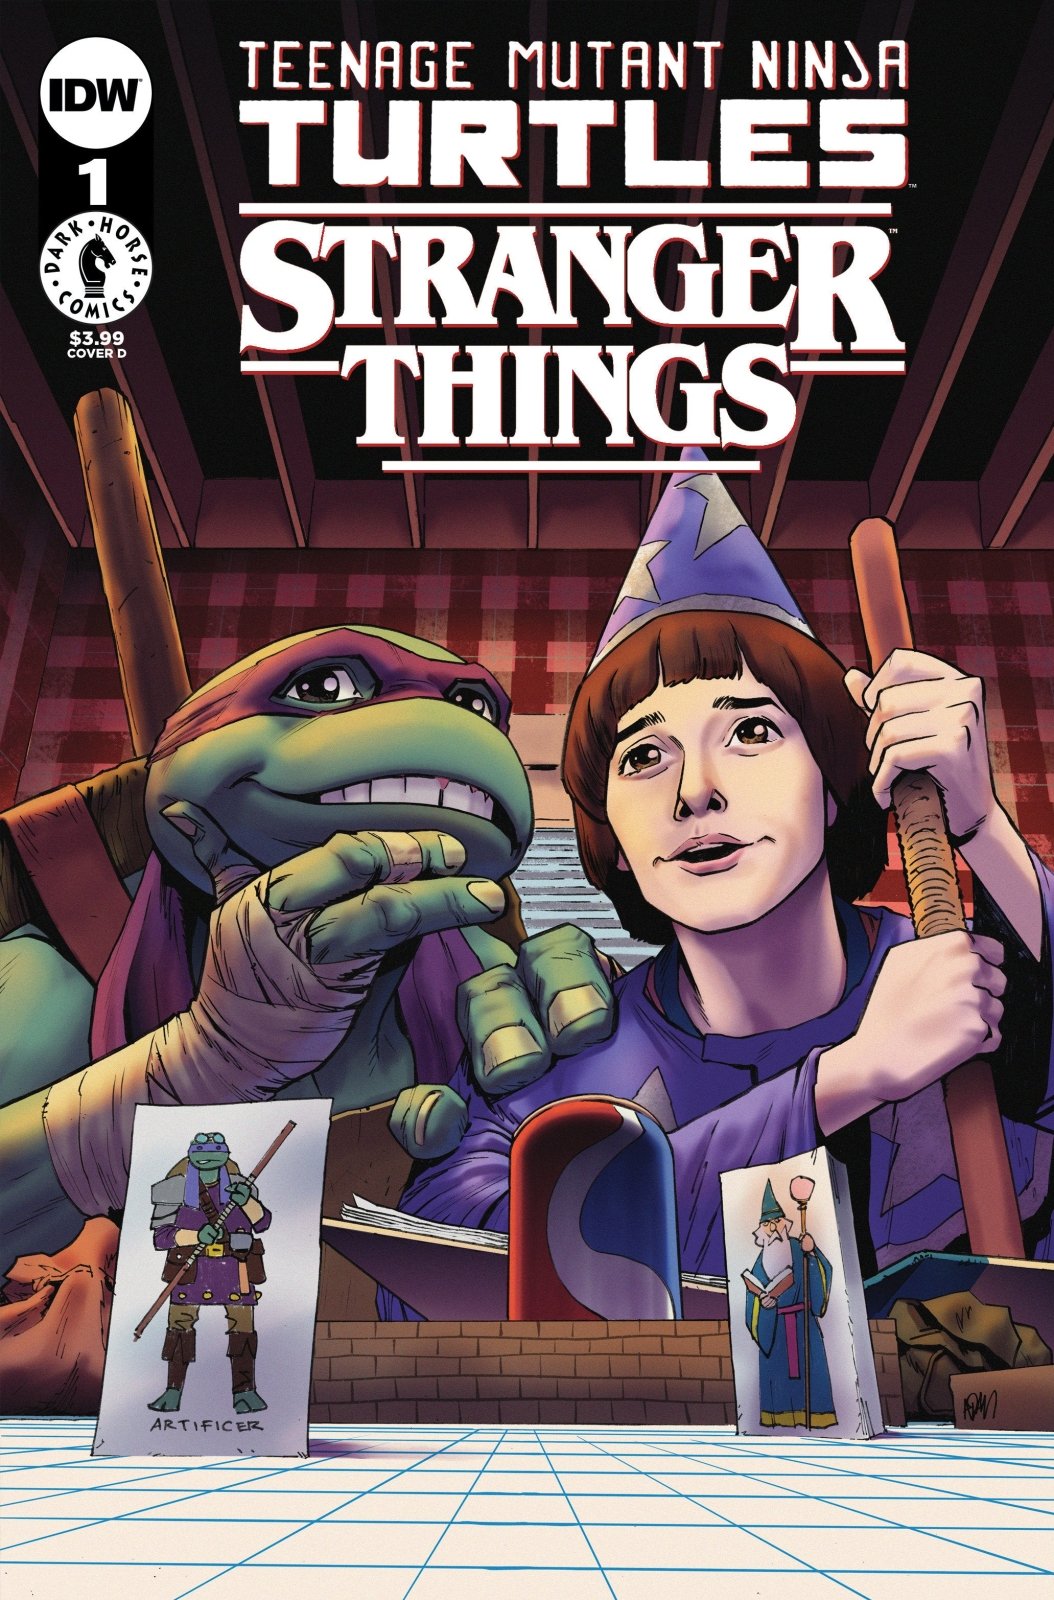 Teenage Mutant Ninja Turtles X Stranger Things #1 Variant D (Gorham) - The Fourth Place